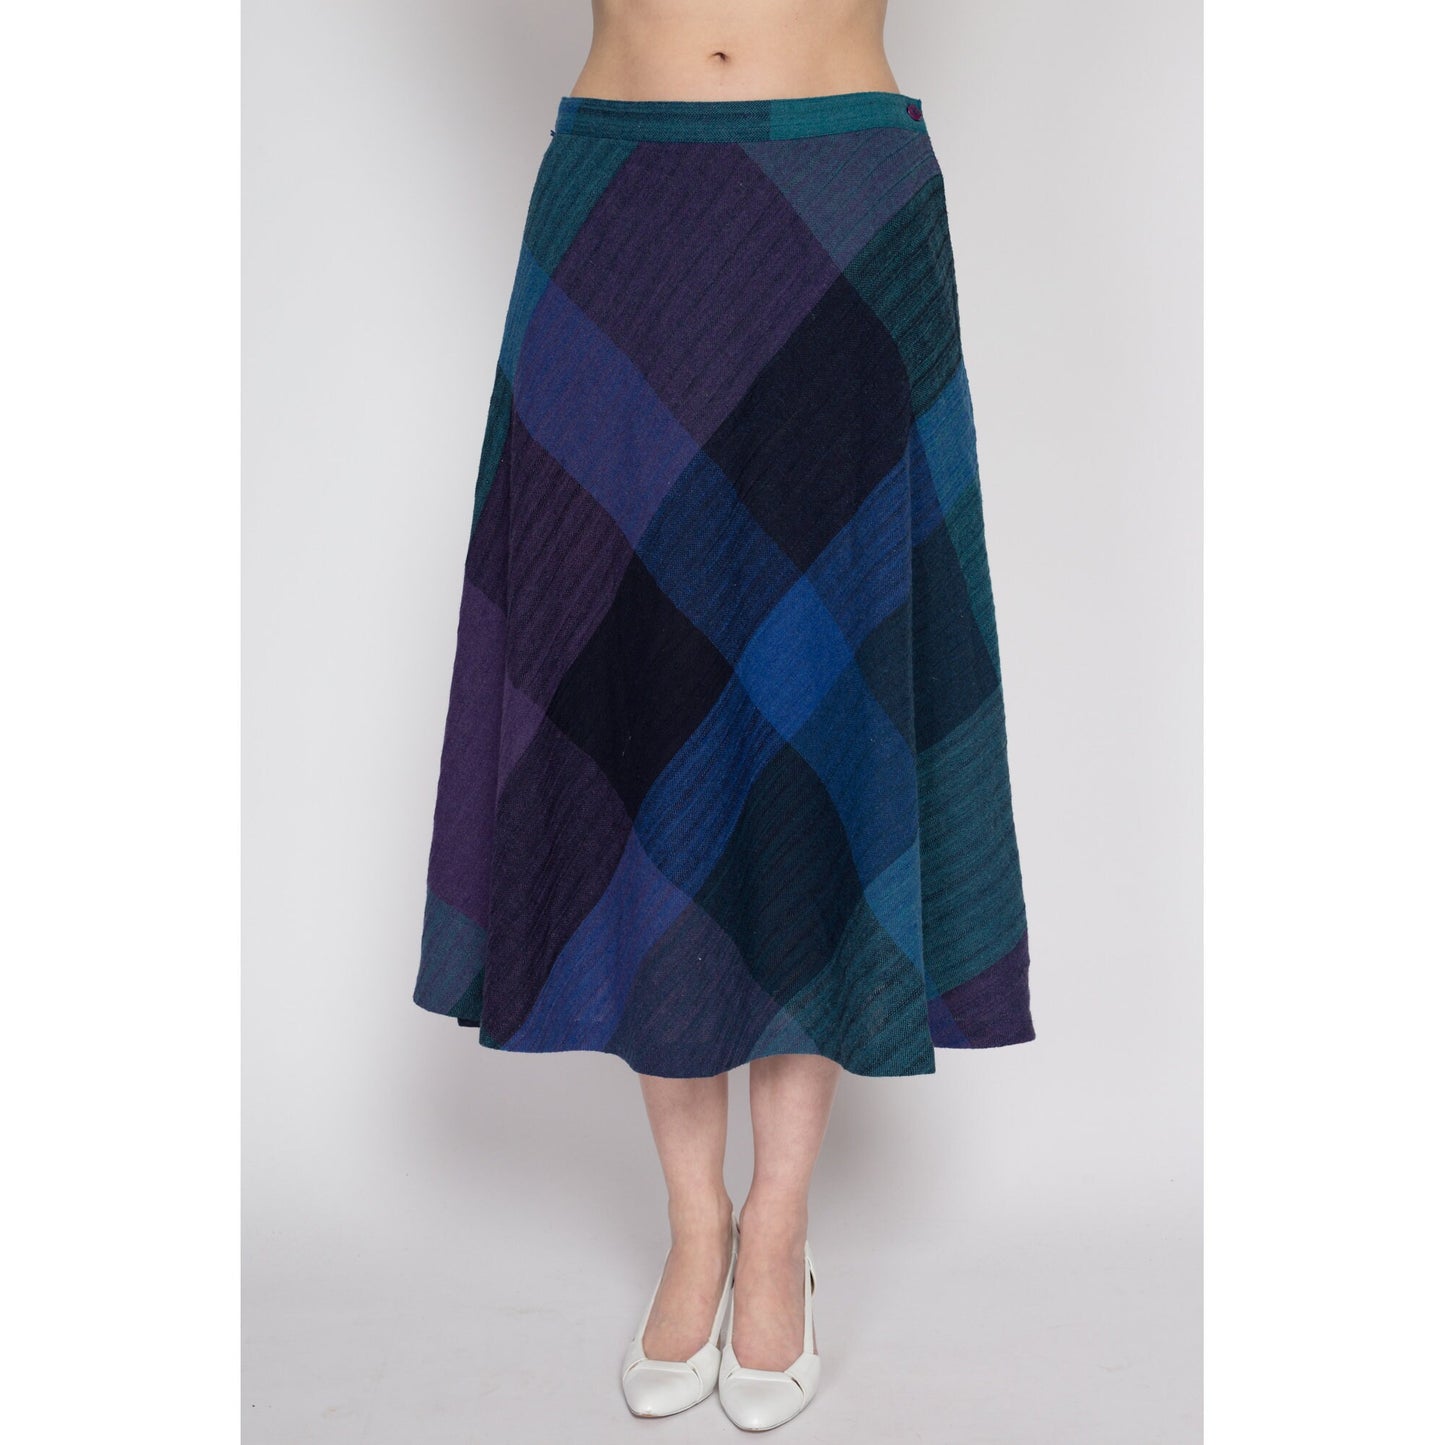 Medium 70s Dark Plaid A Line Midi Skirt 28" | Vintage Blue Purple Green Preppy High Waisted Flowy Pocket Skirt